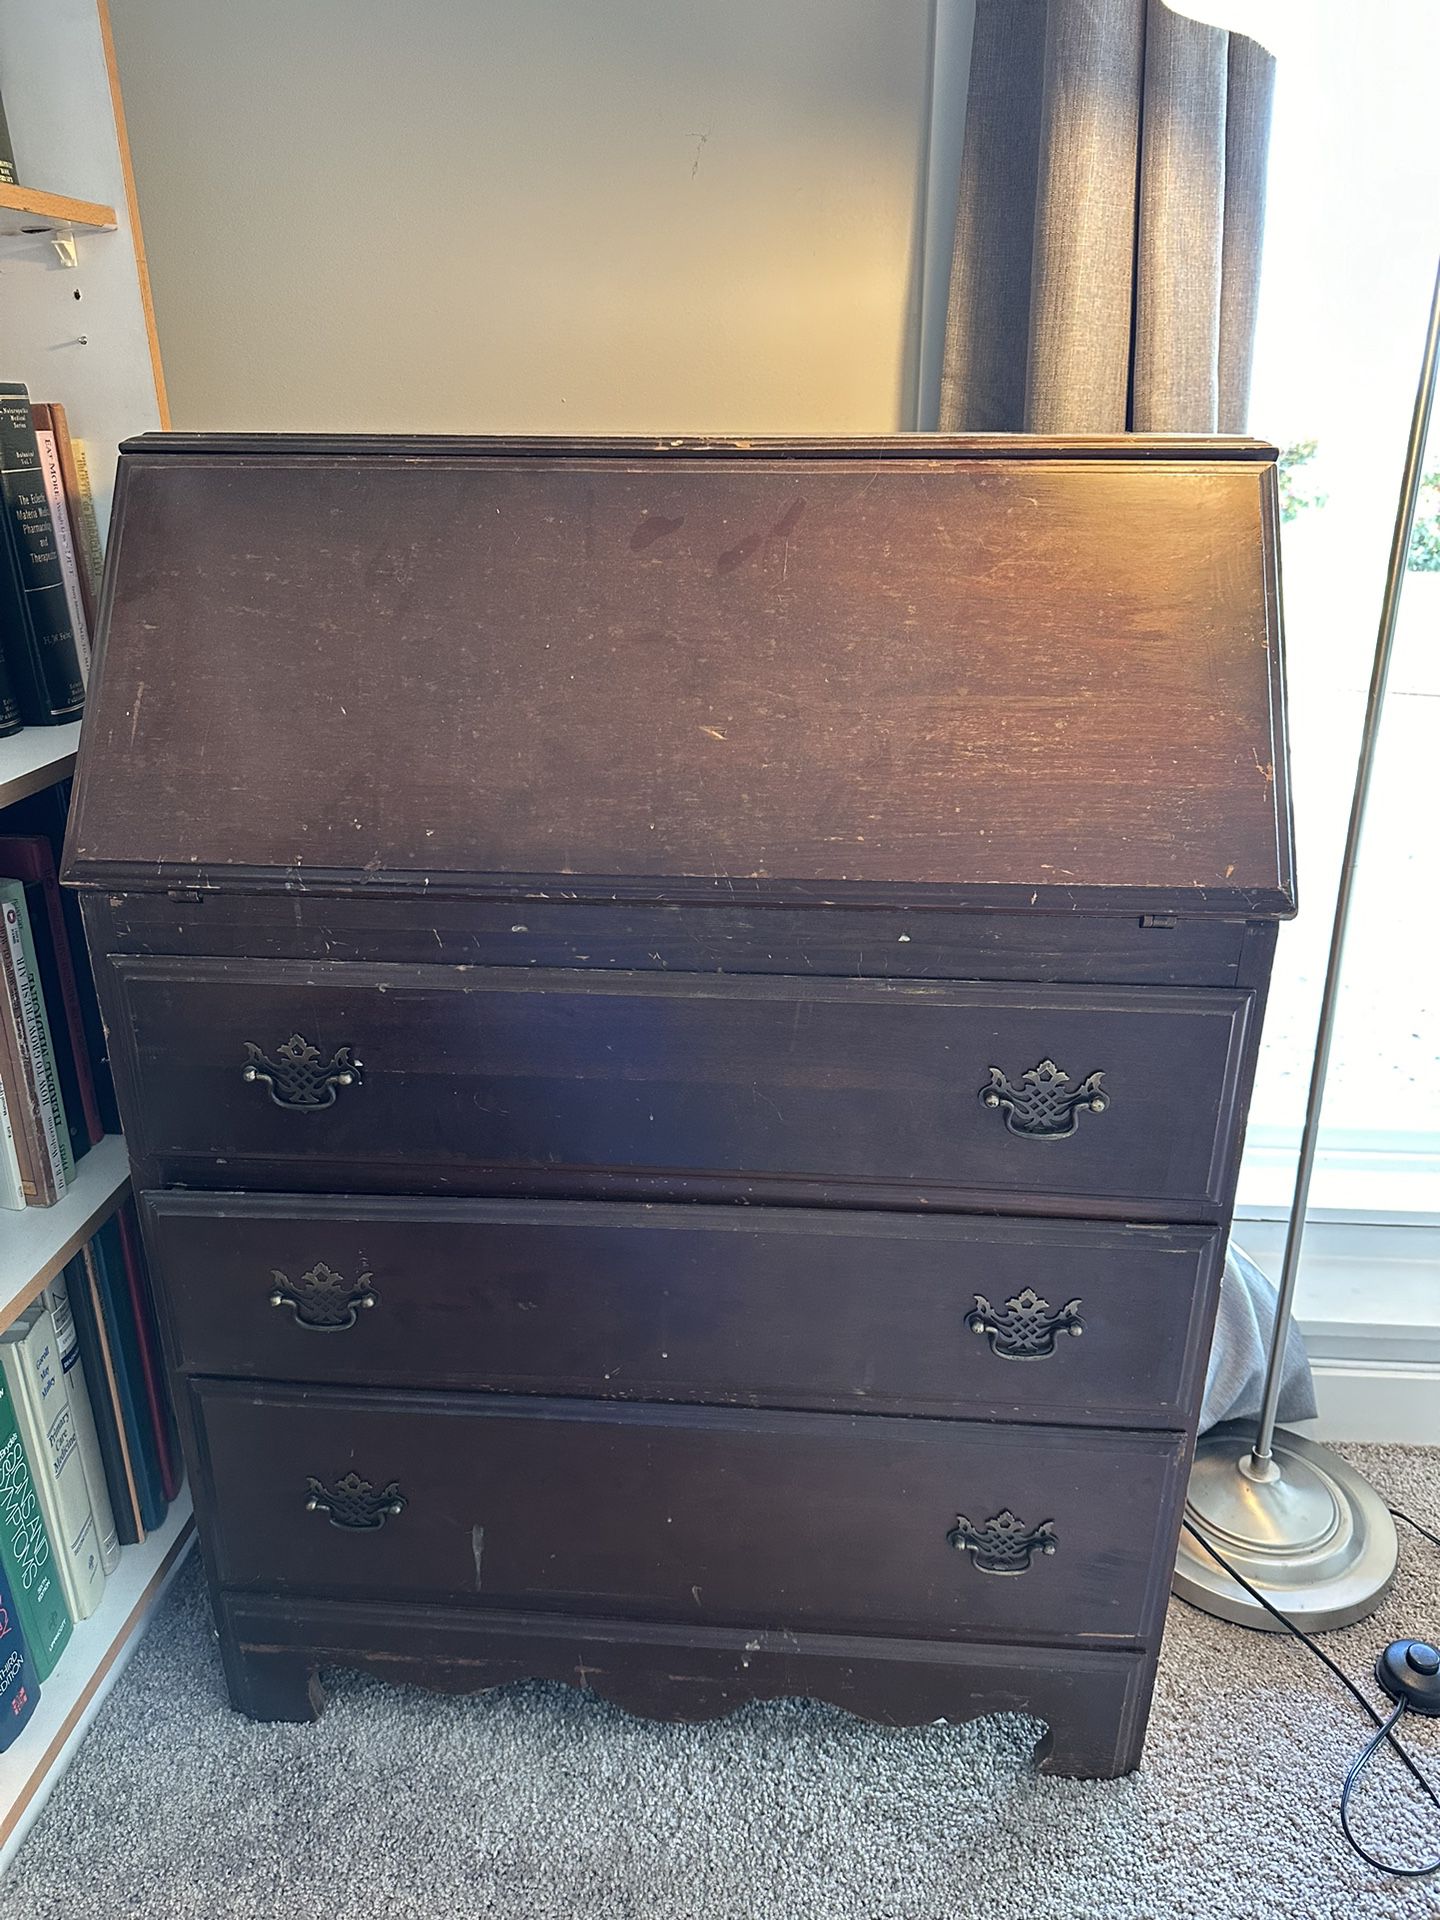 Free - Antique Dresser/table